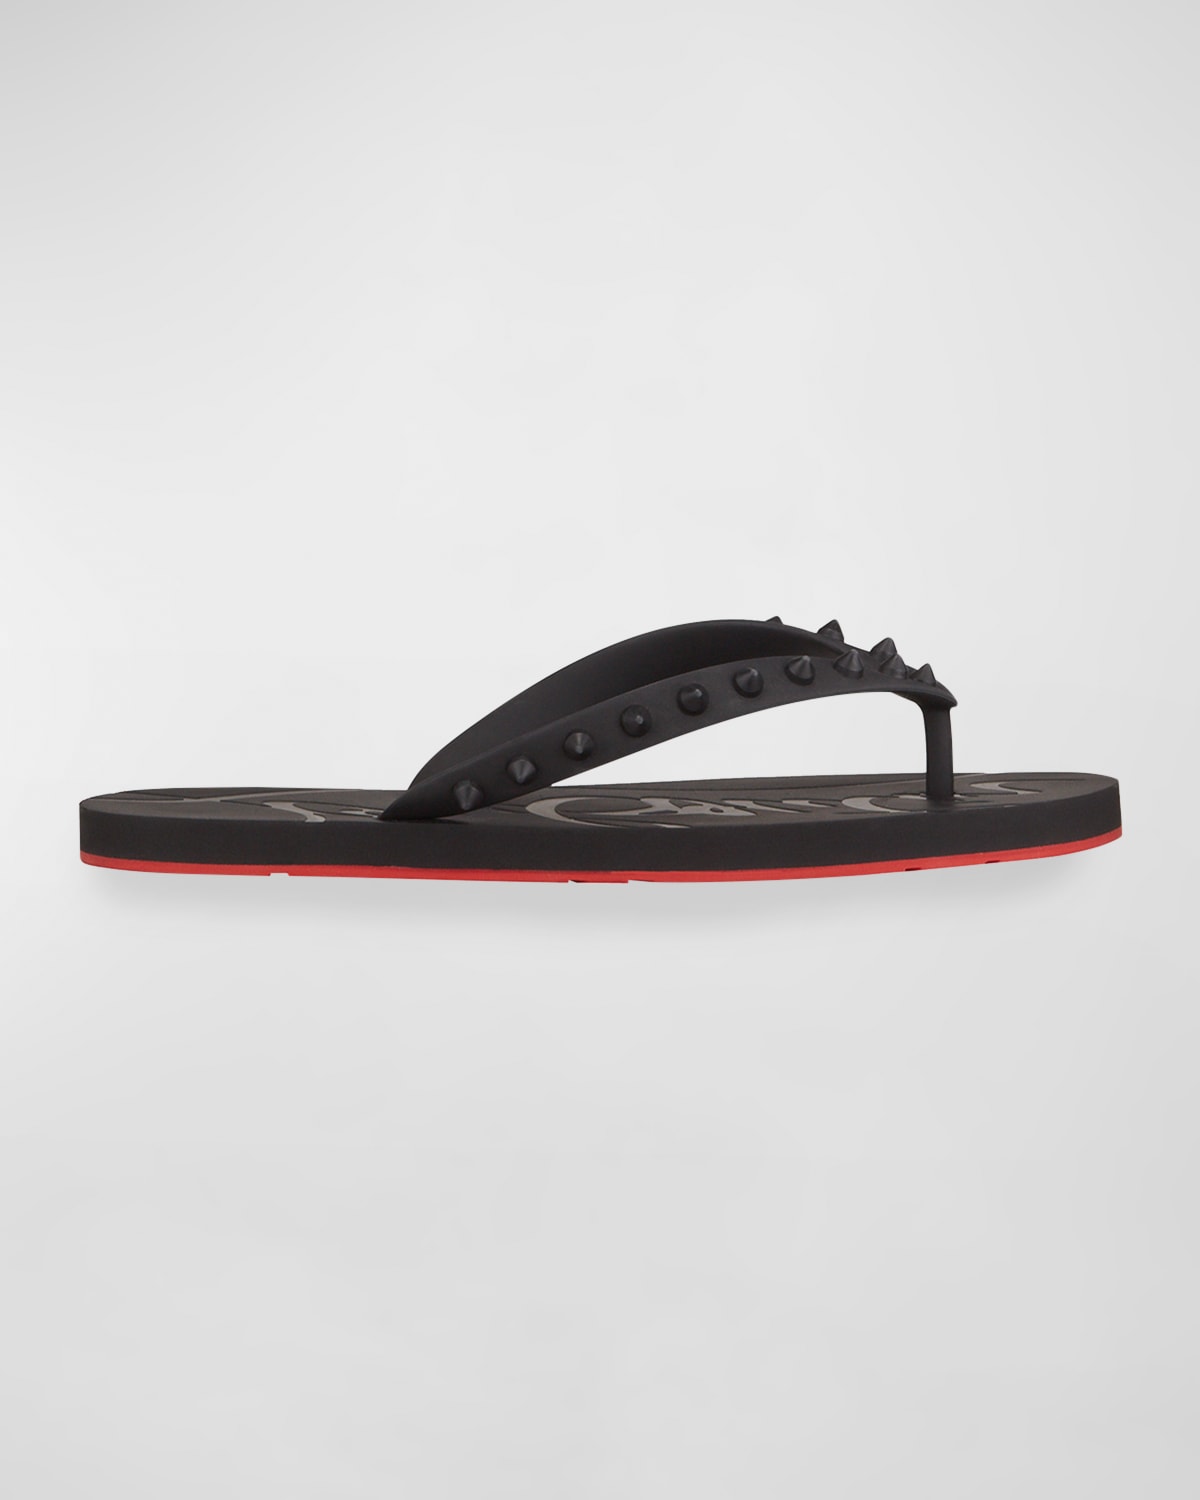 Supramariza Red Sole Patent Leather Platform Sandals